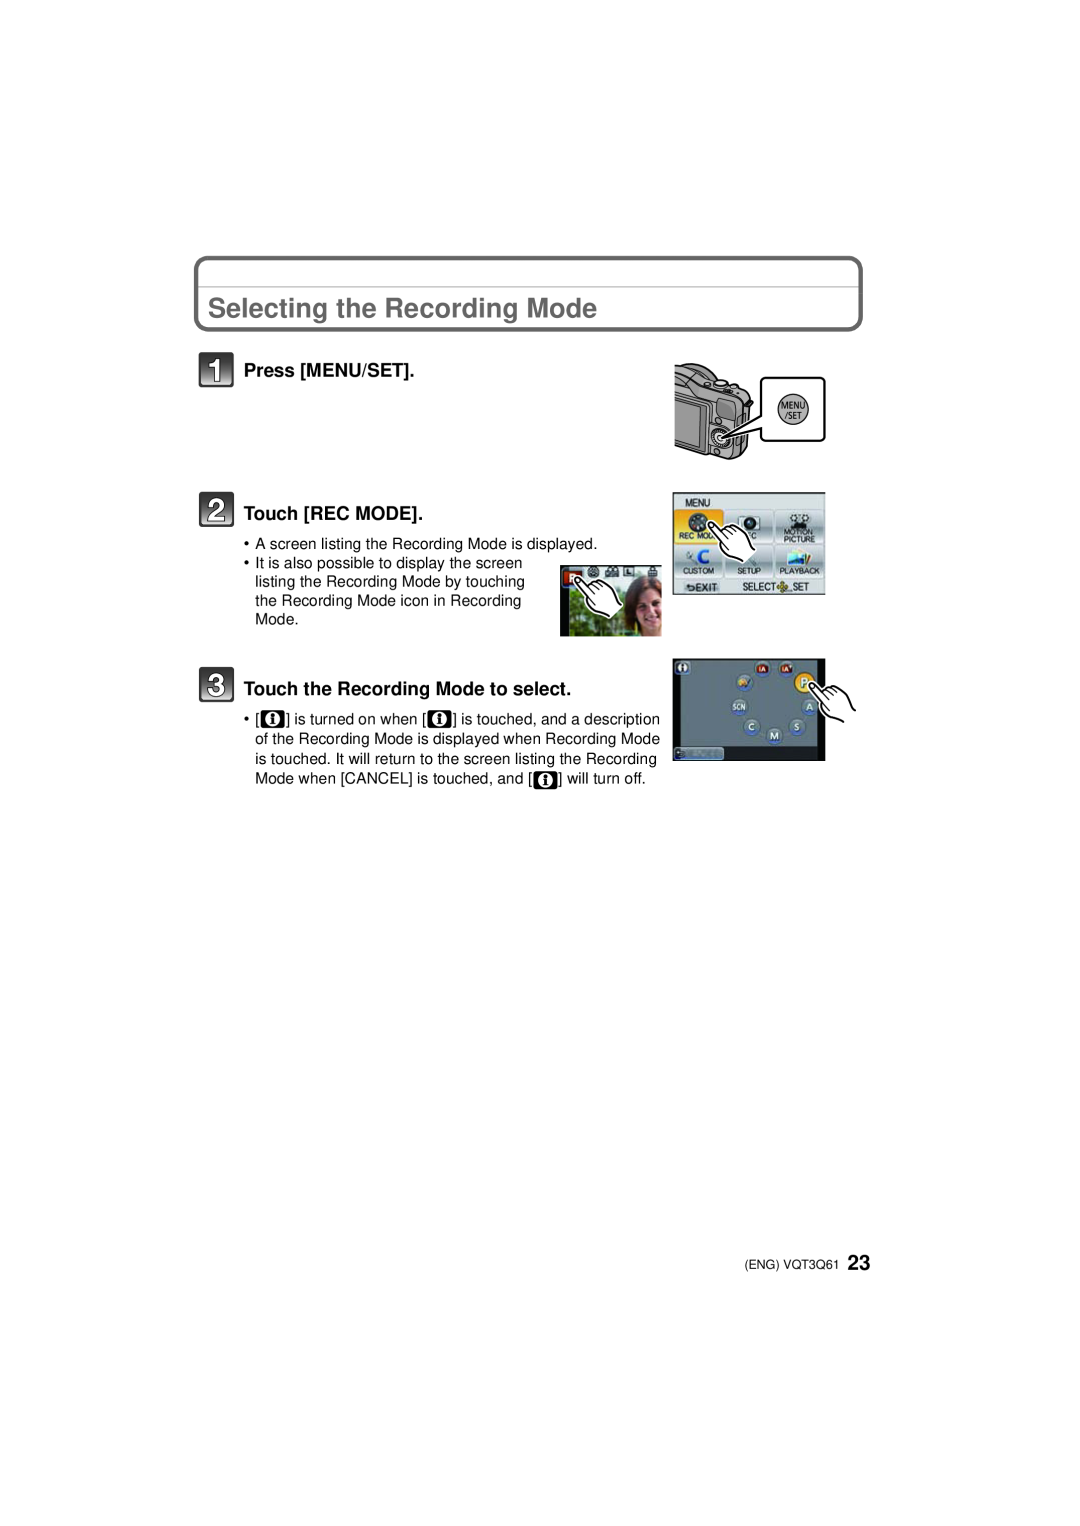 Panasonic DMC-GF3C Selecting the Recording Mode, Press MENU/SET Touch REC MODE, Touch the Recording Mode to select 